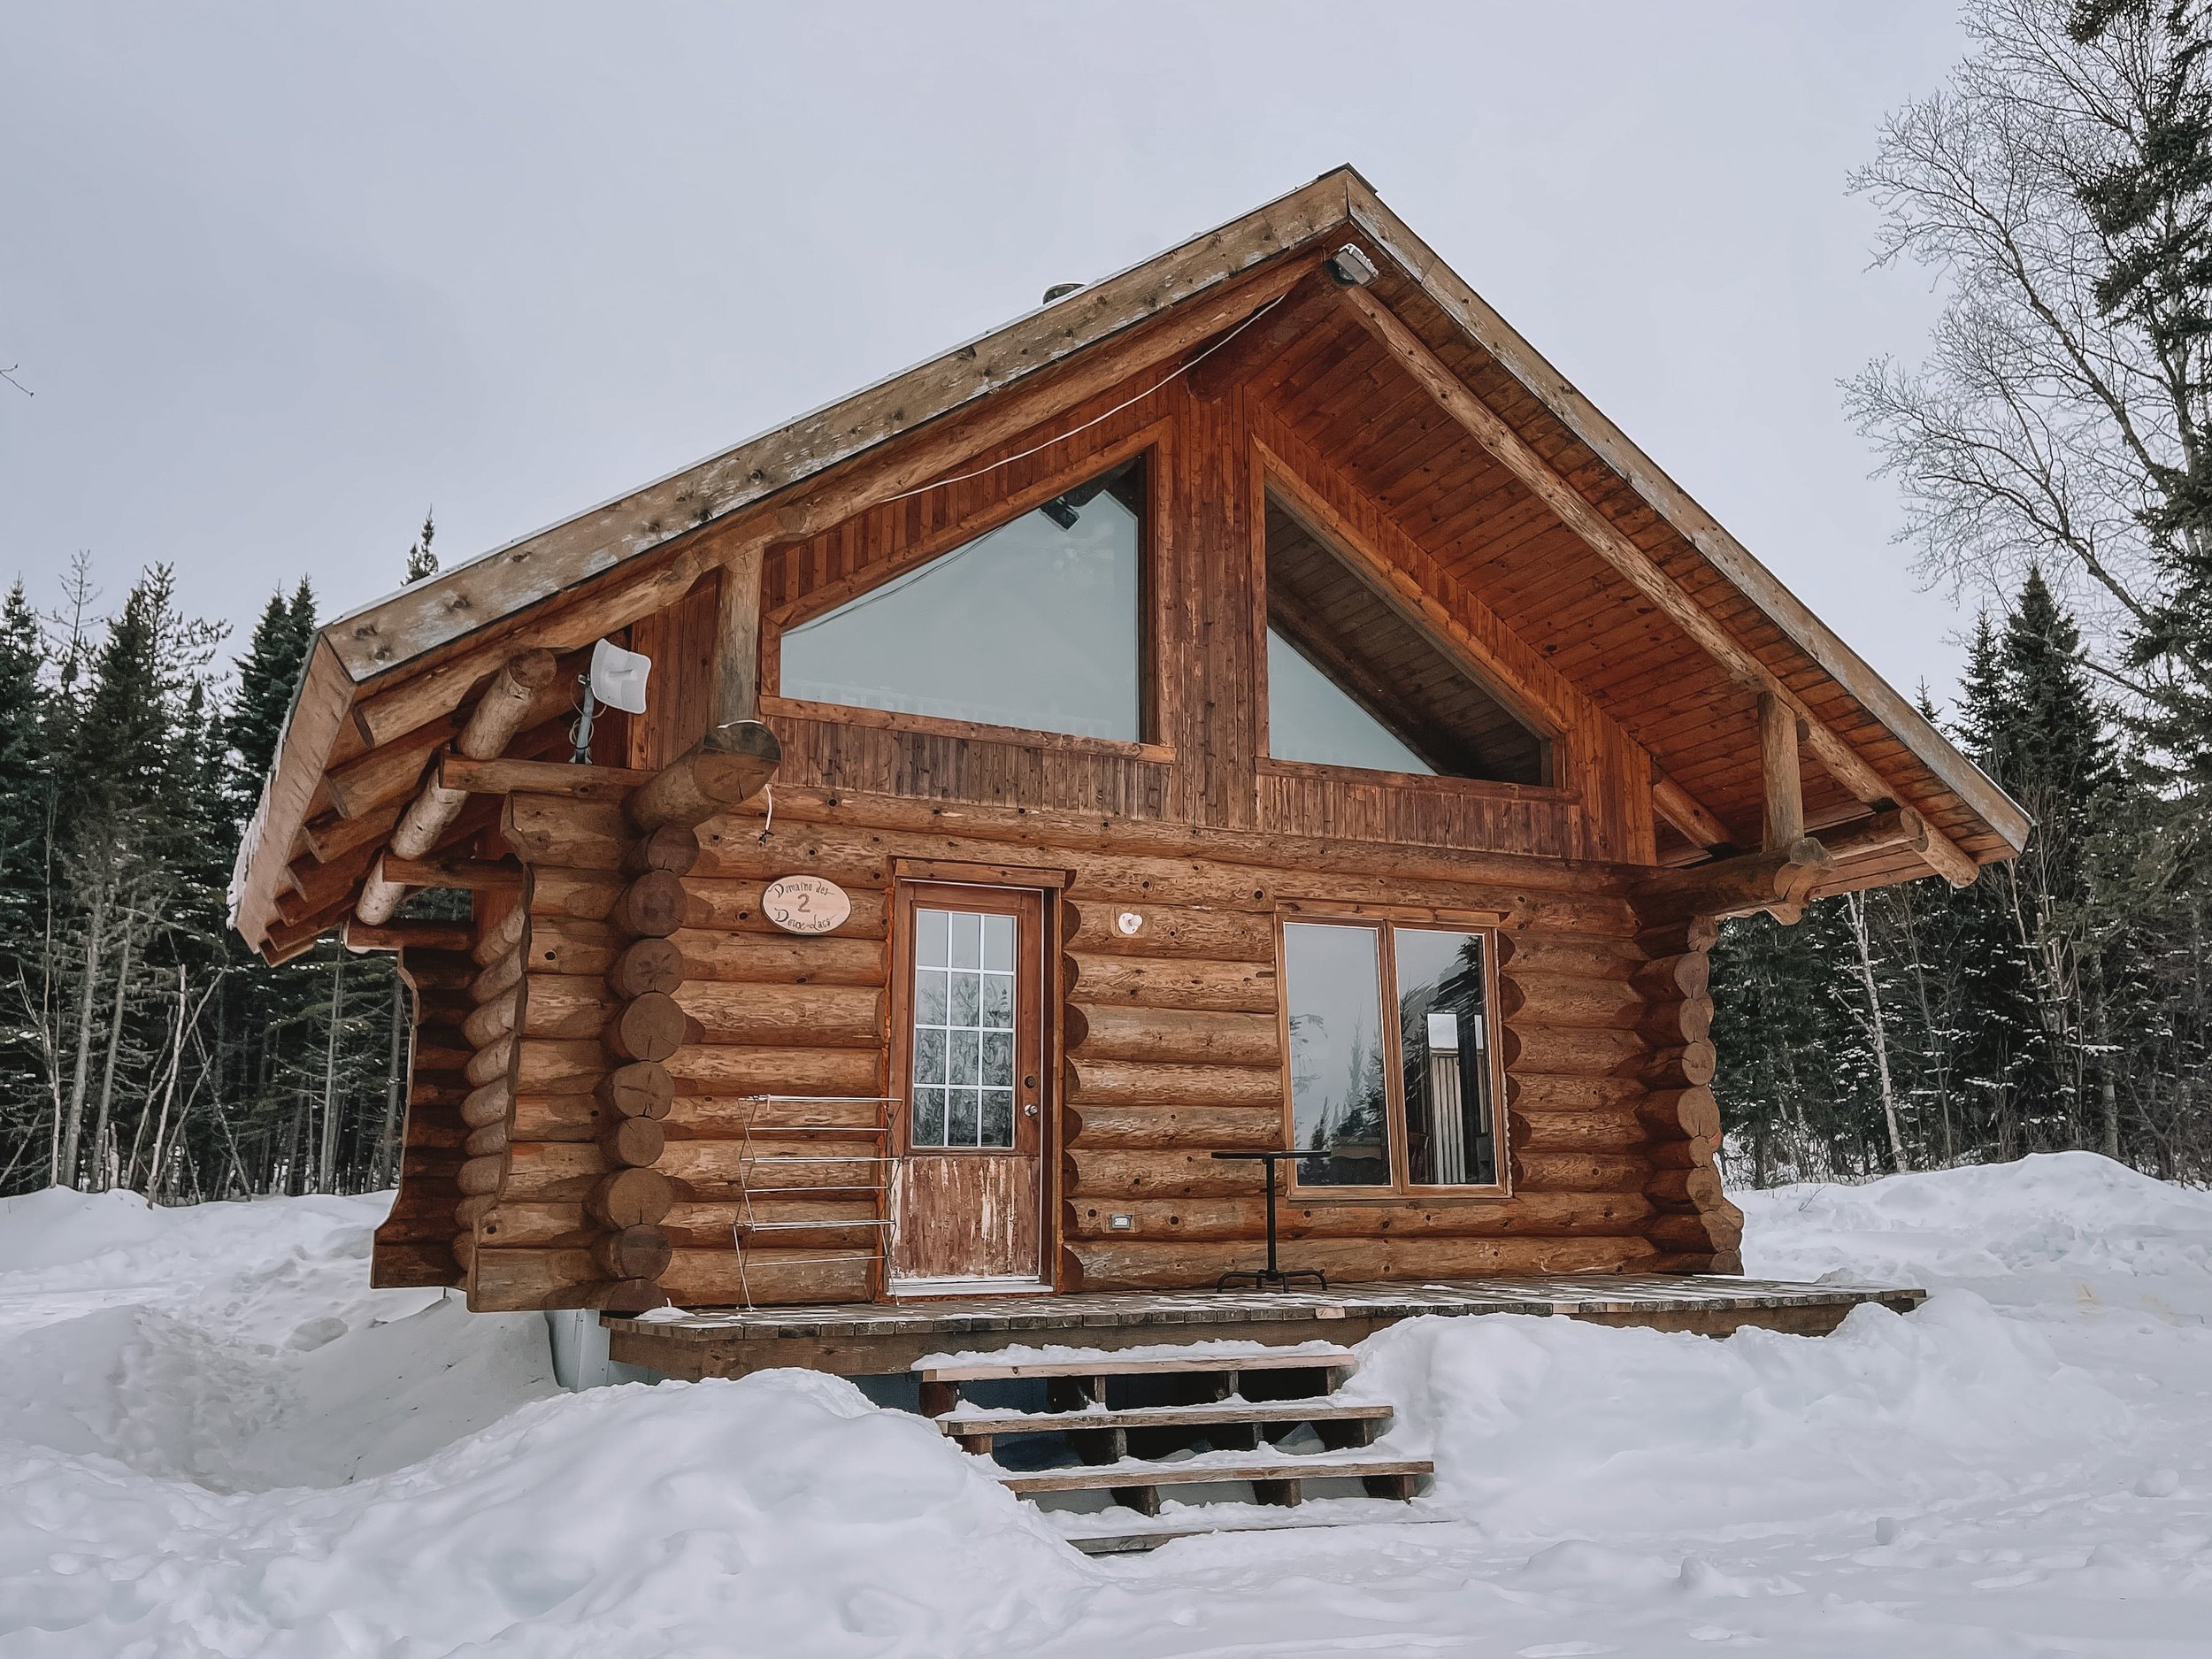 Winter Cabin - St-Urbain-de-Charlevoix - Quebec - Canada